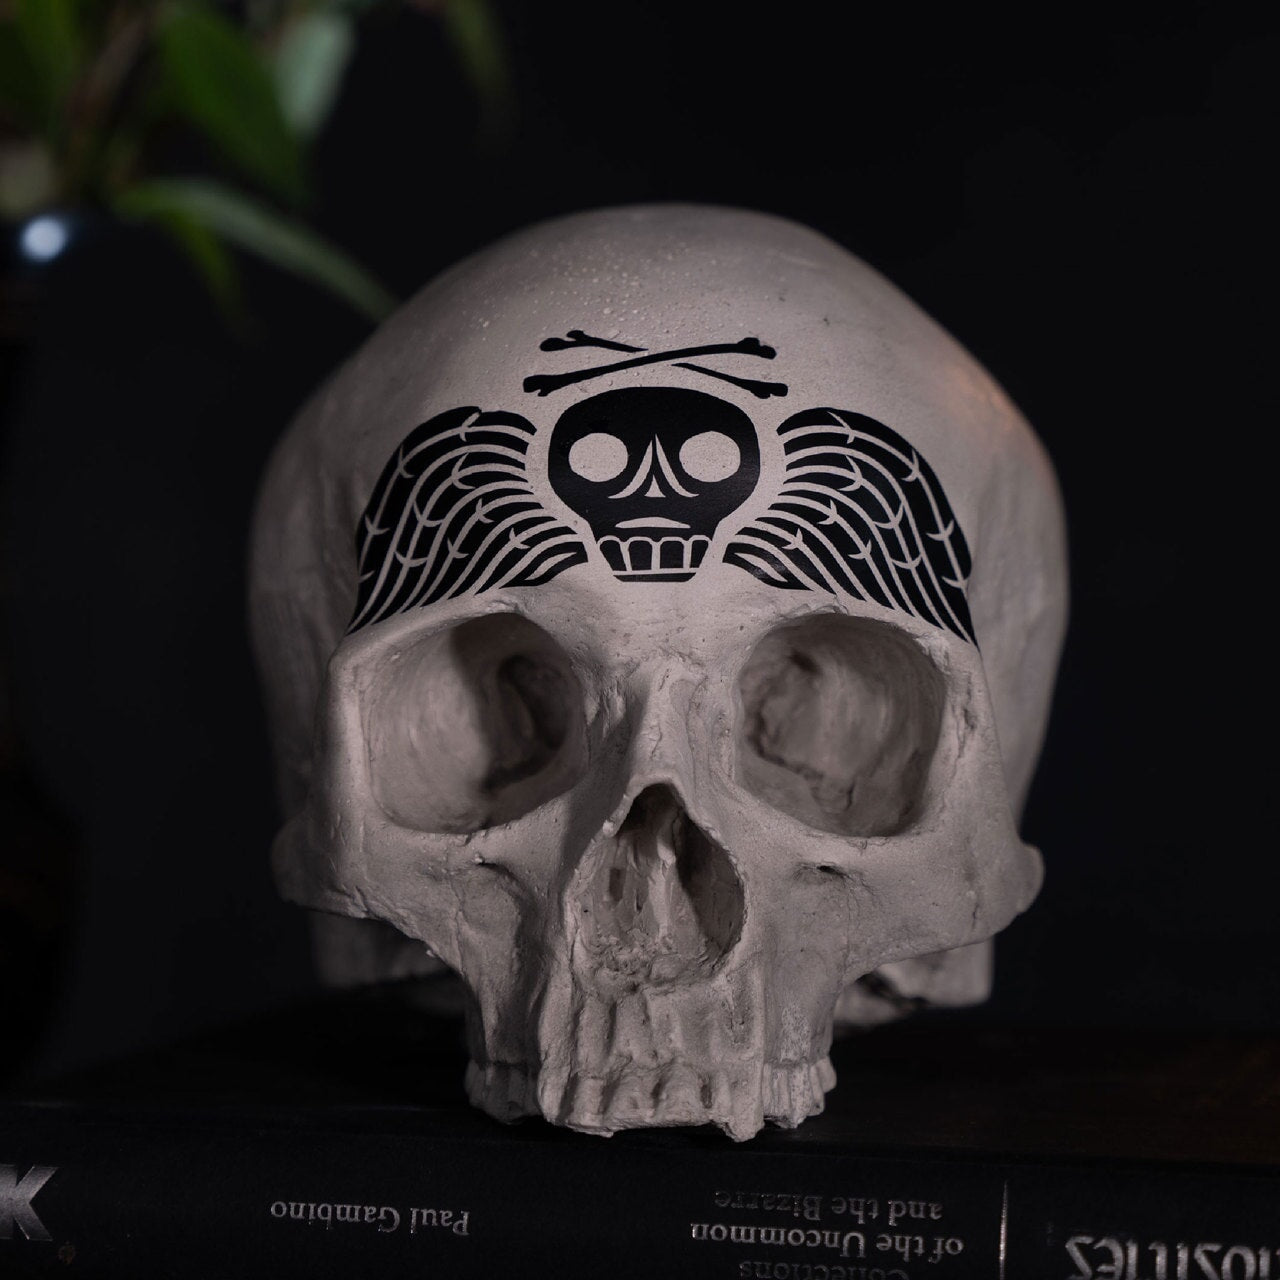 Skull of j doe memento more winged skull ornament by the blackened teeth gothic home decor 